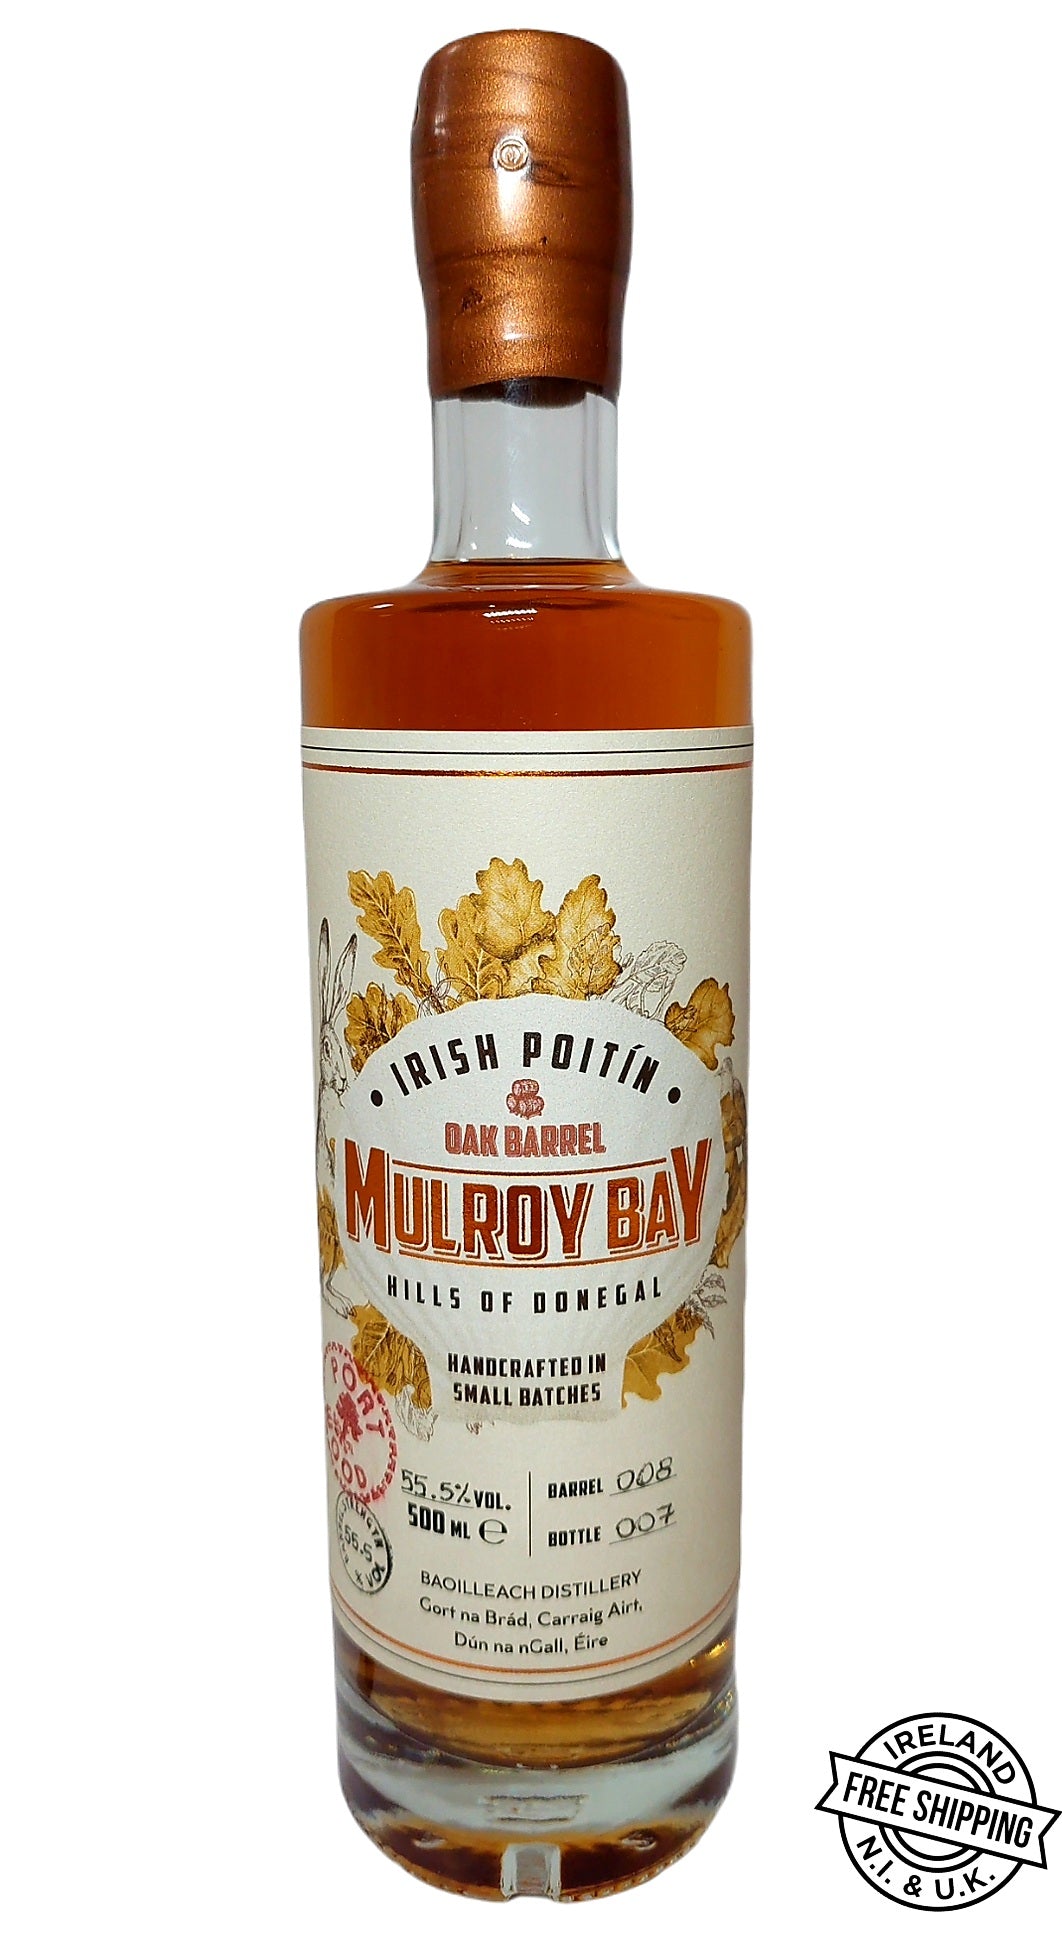 Mulroy Bay - Irish Poitín 55.5% - Barrel Rested Port Wood - 500ml